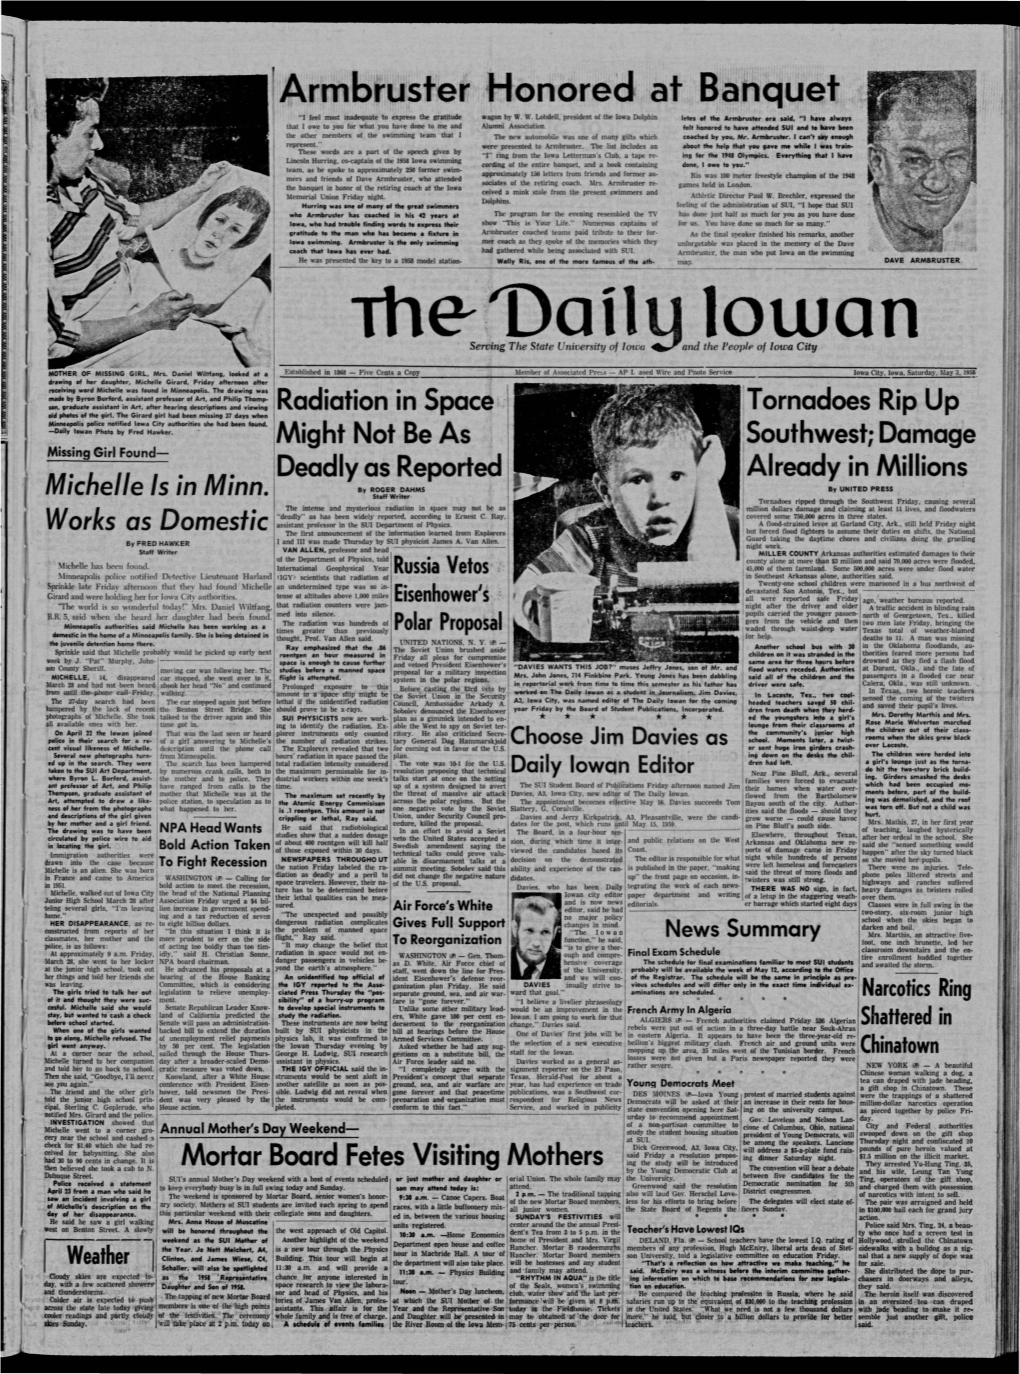 Daily Iowan: Archive